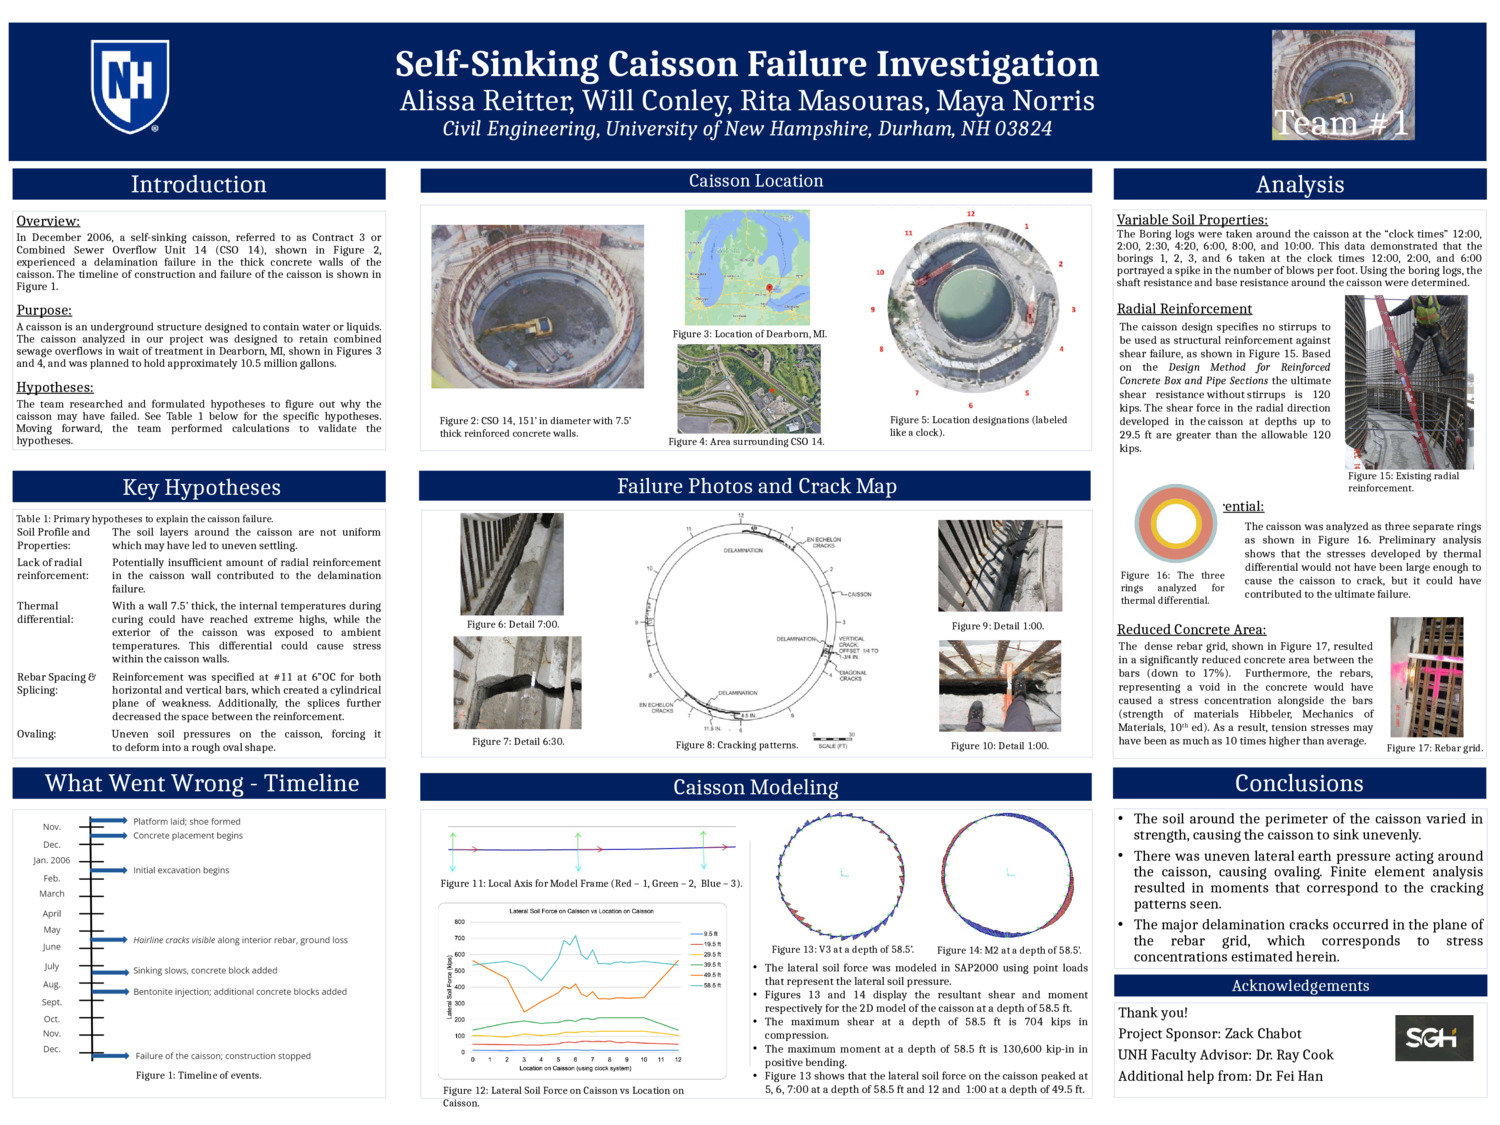 Self-Sinking Caisson Failure Investigation by akr1019